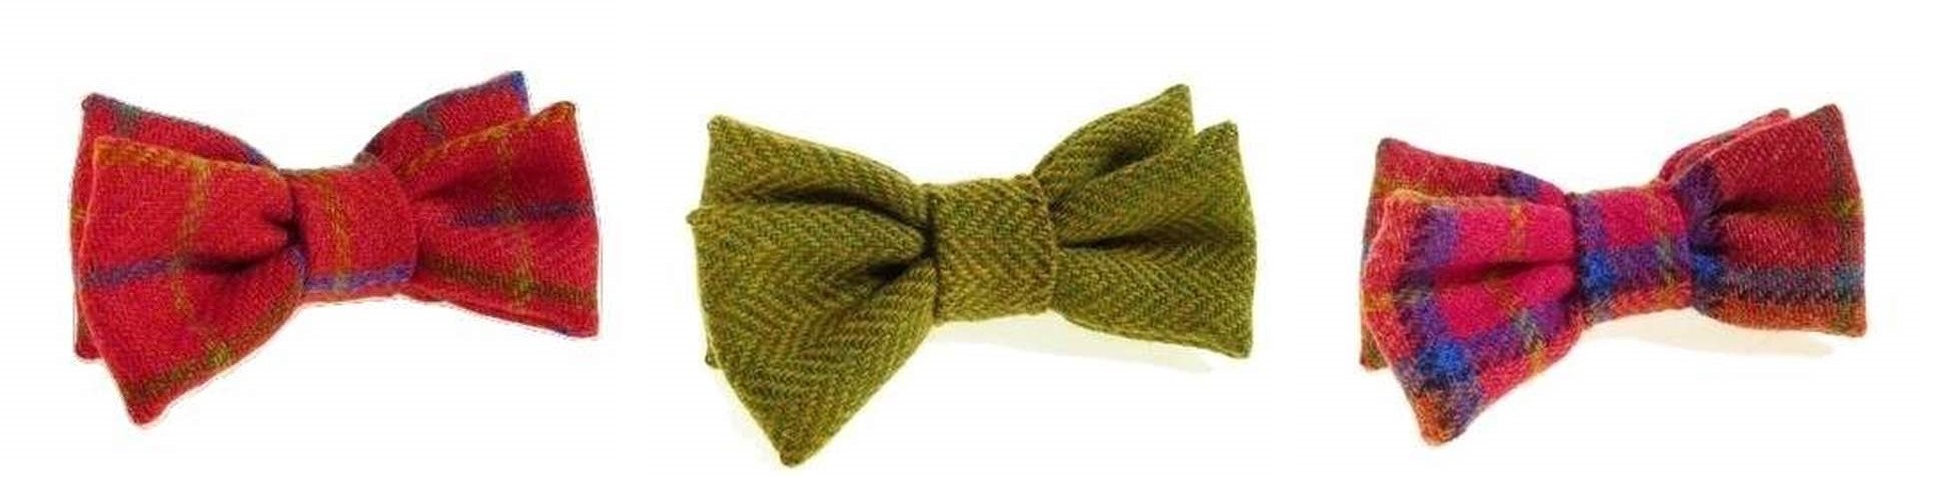 Donegal Tweed Bow Tie